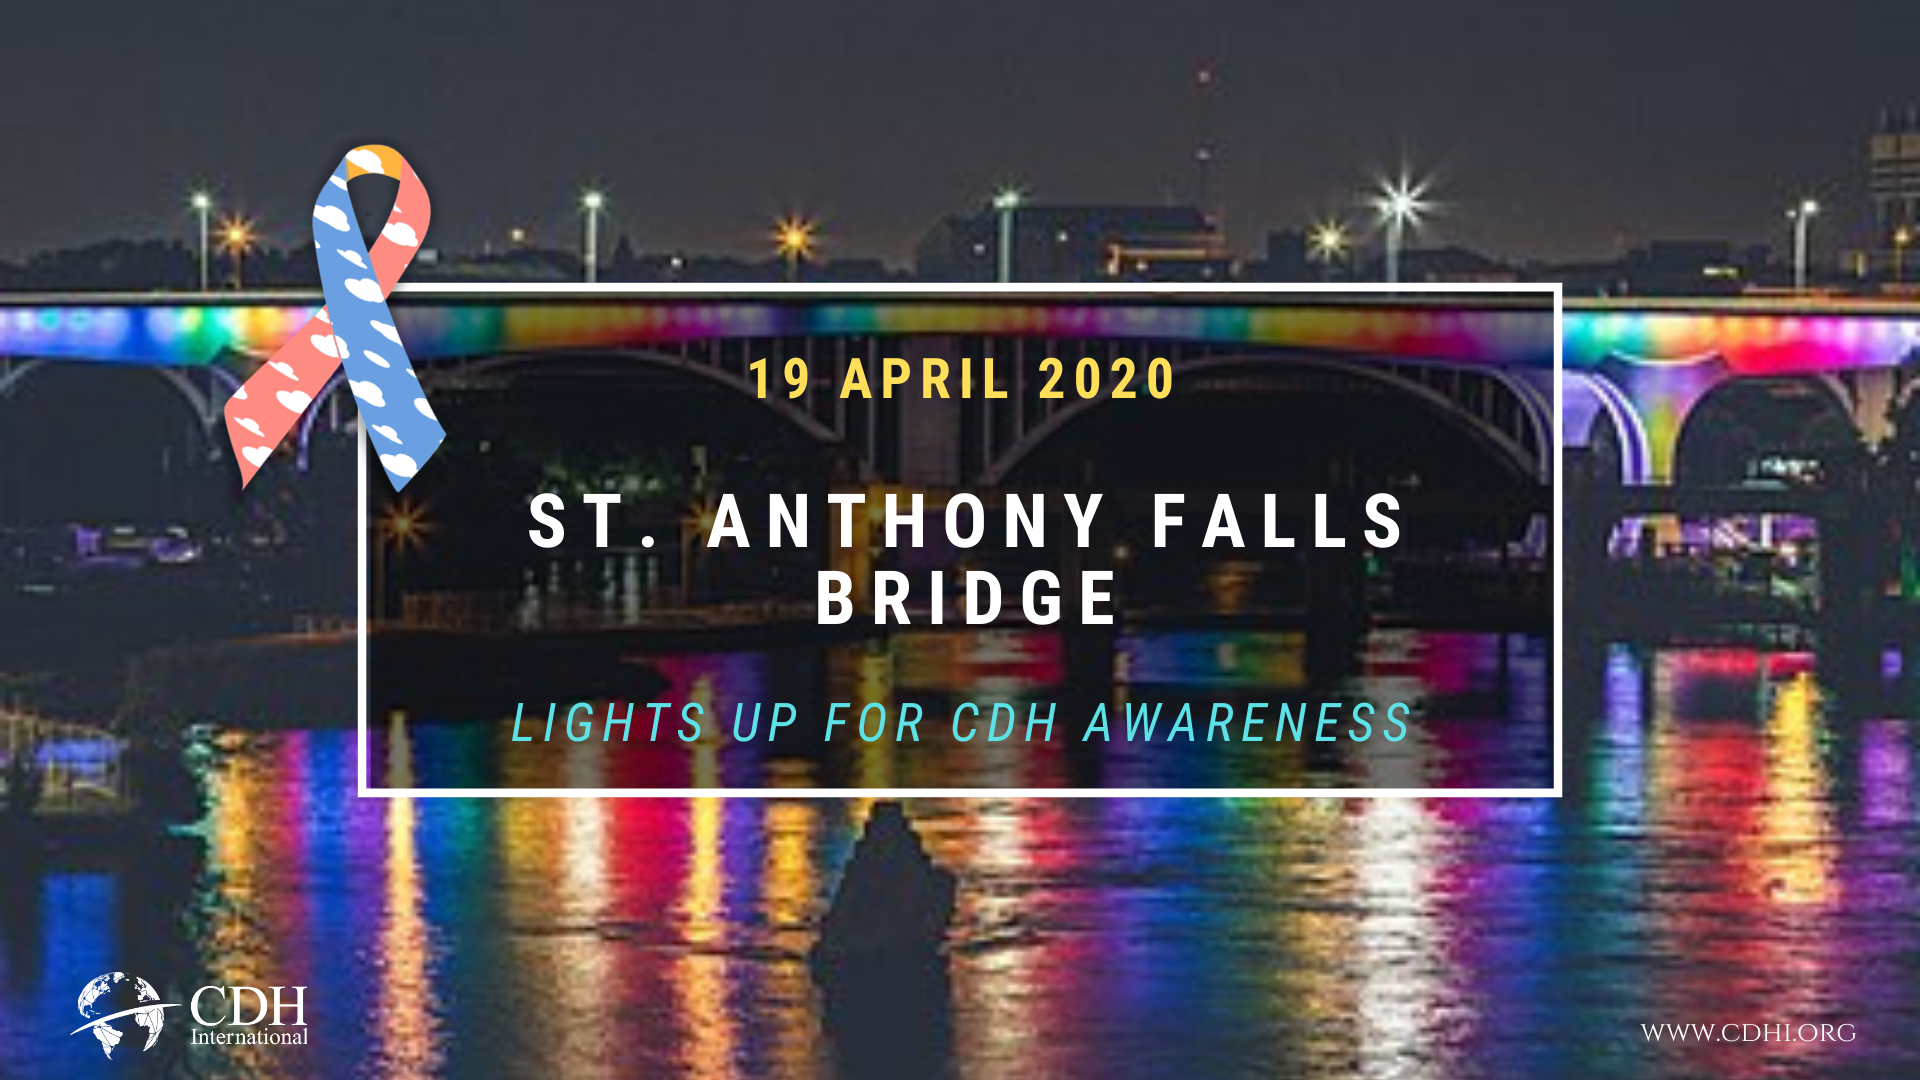 The Lowry Avenue Bridge Lights Up For CDH Awareness